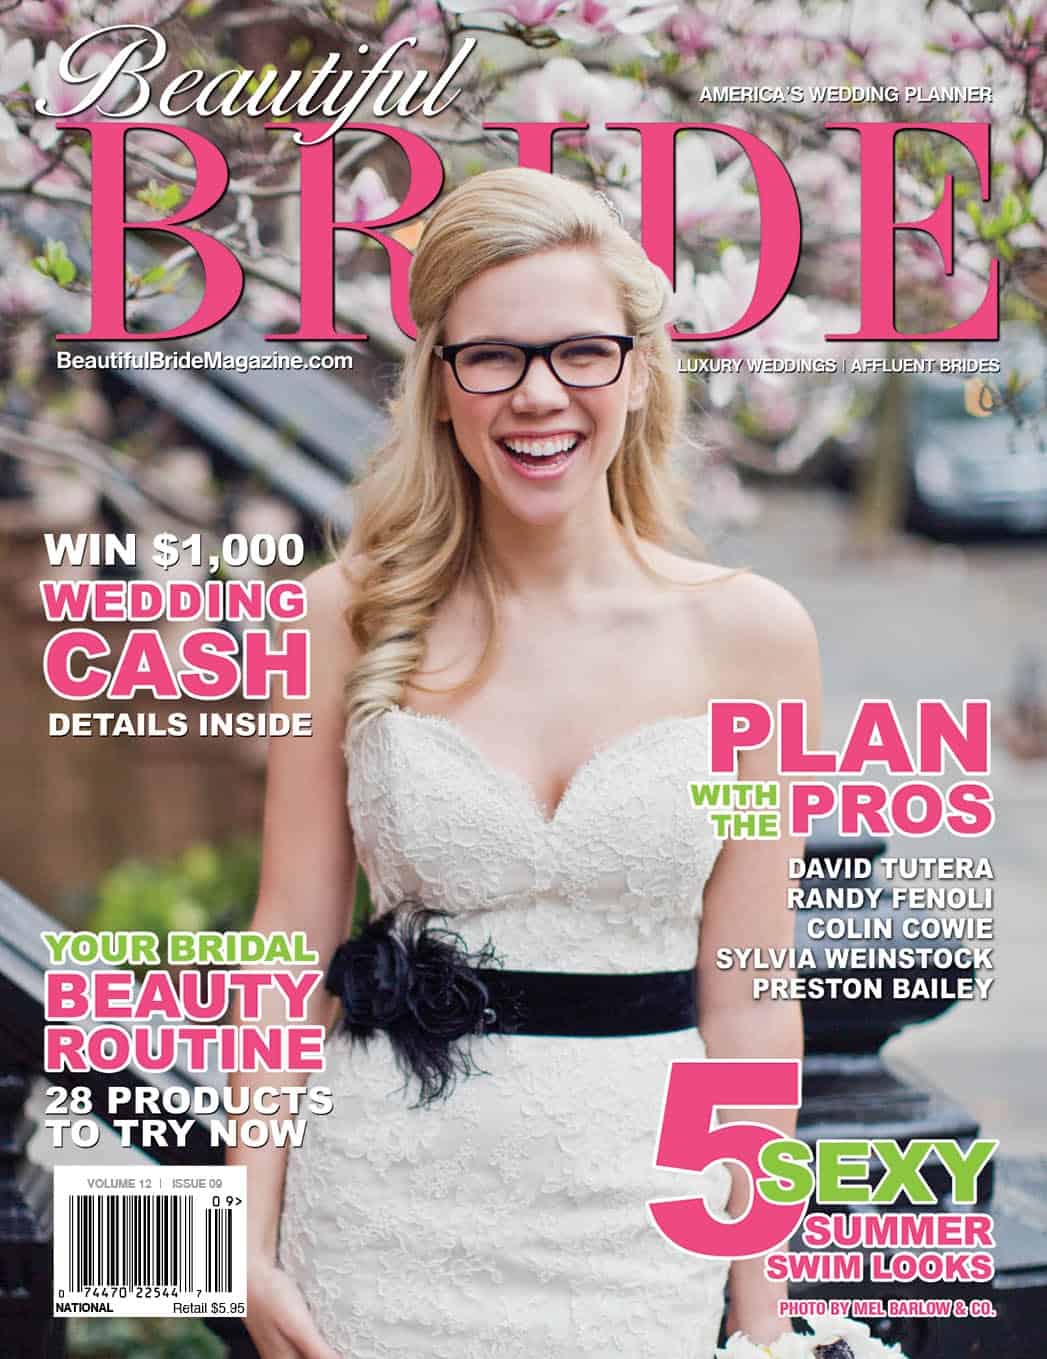 Belize Weddings at Hamanasi covered in Beautiful Bride Magazine